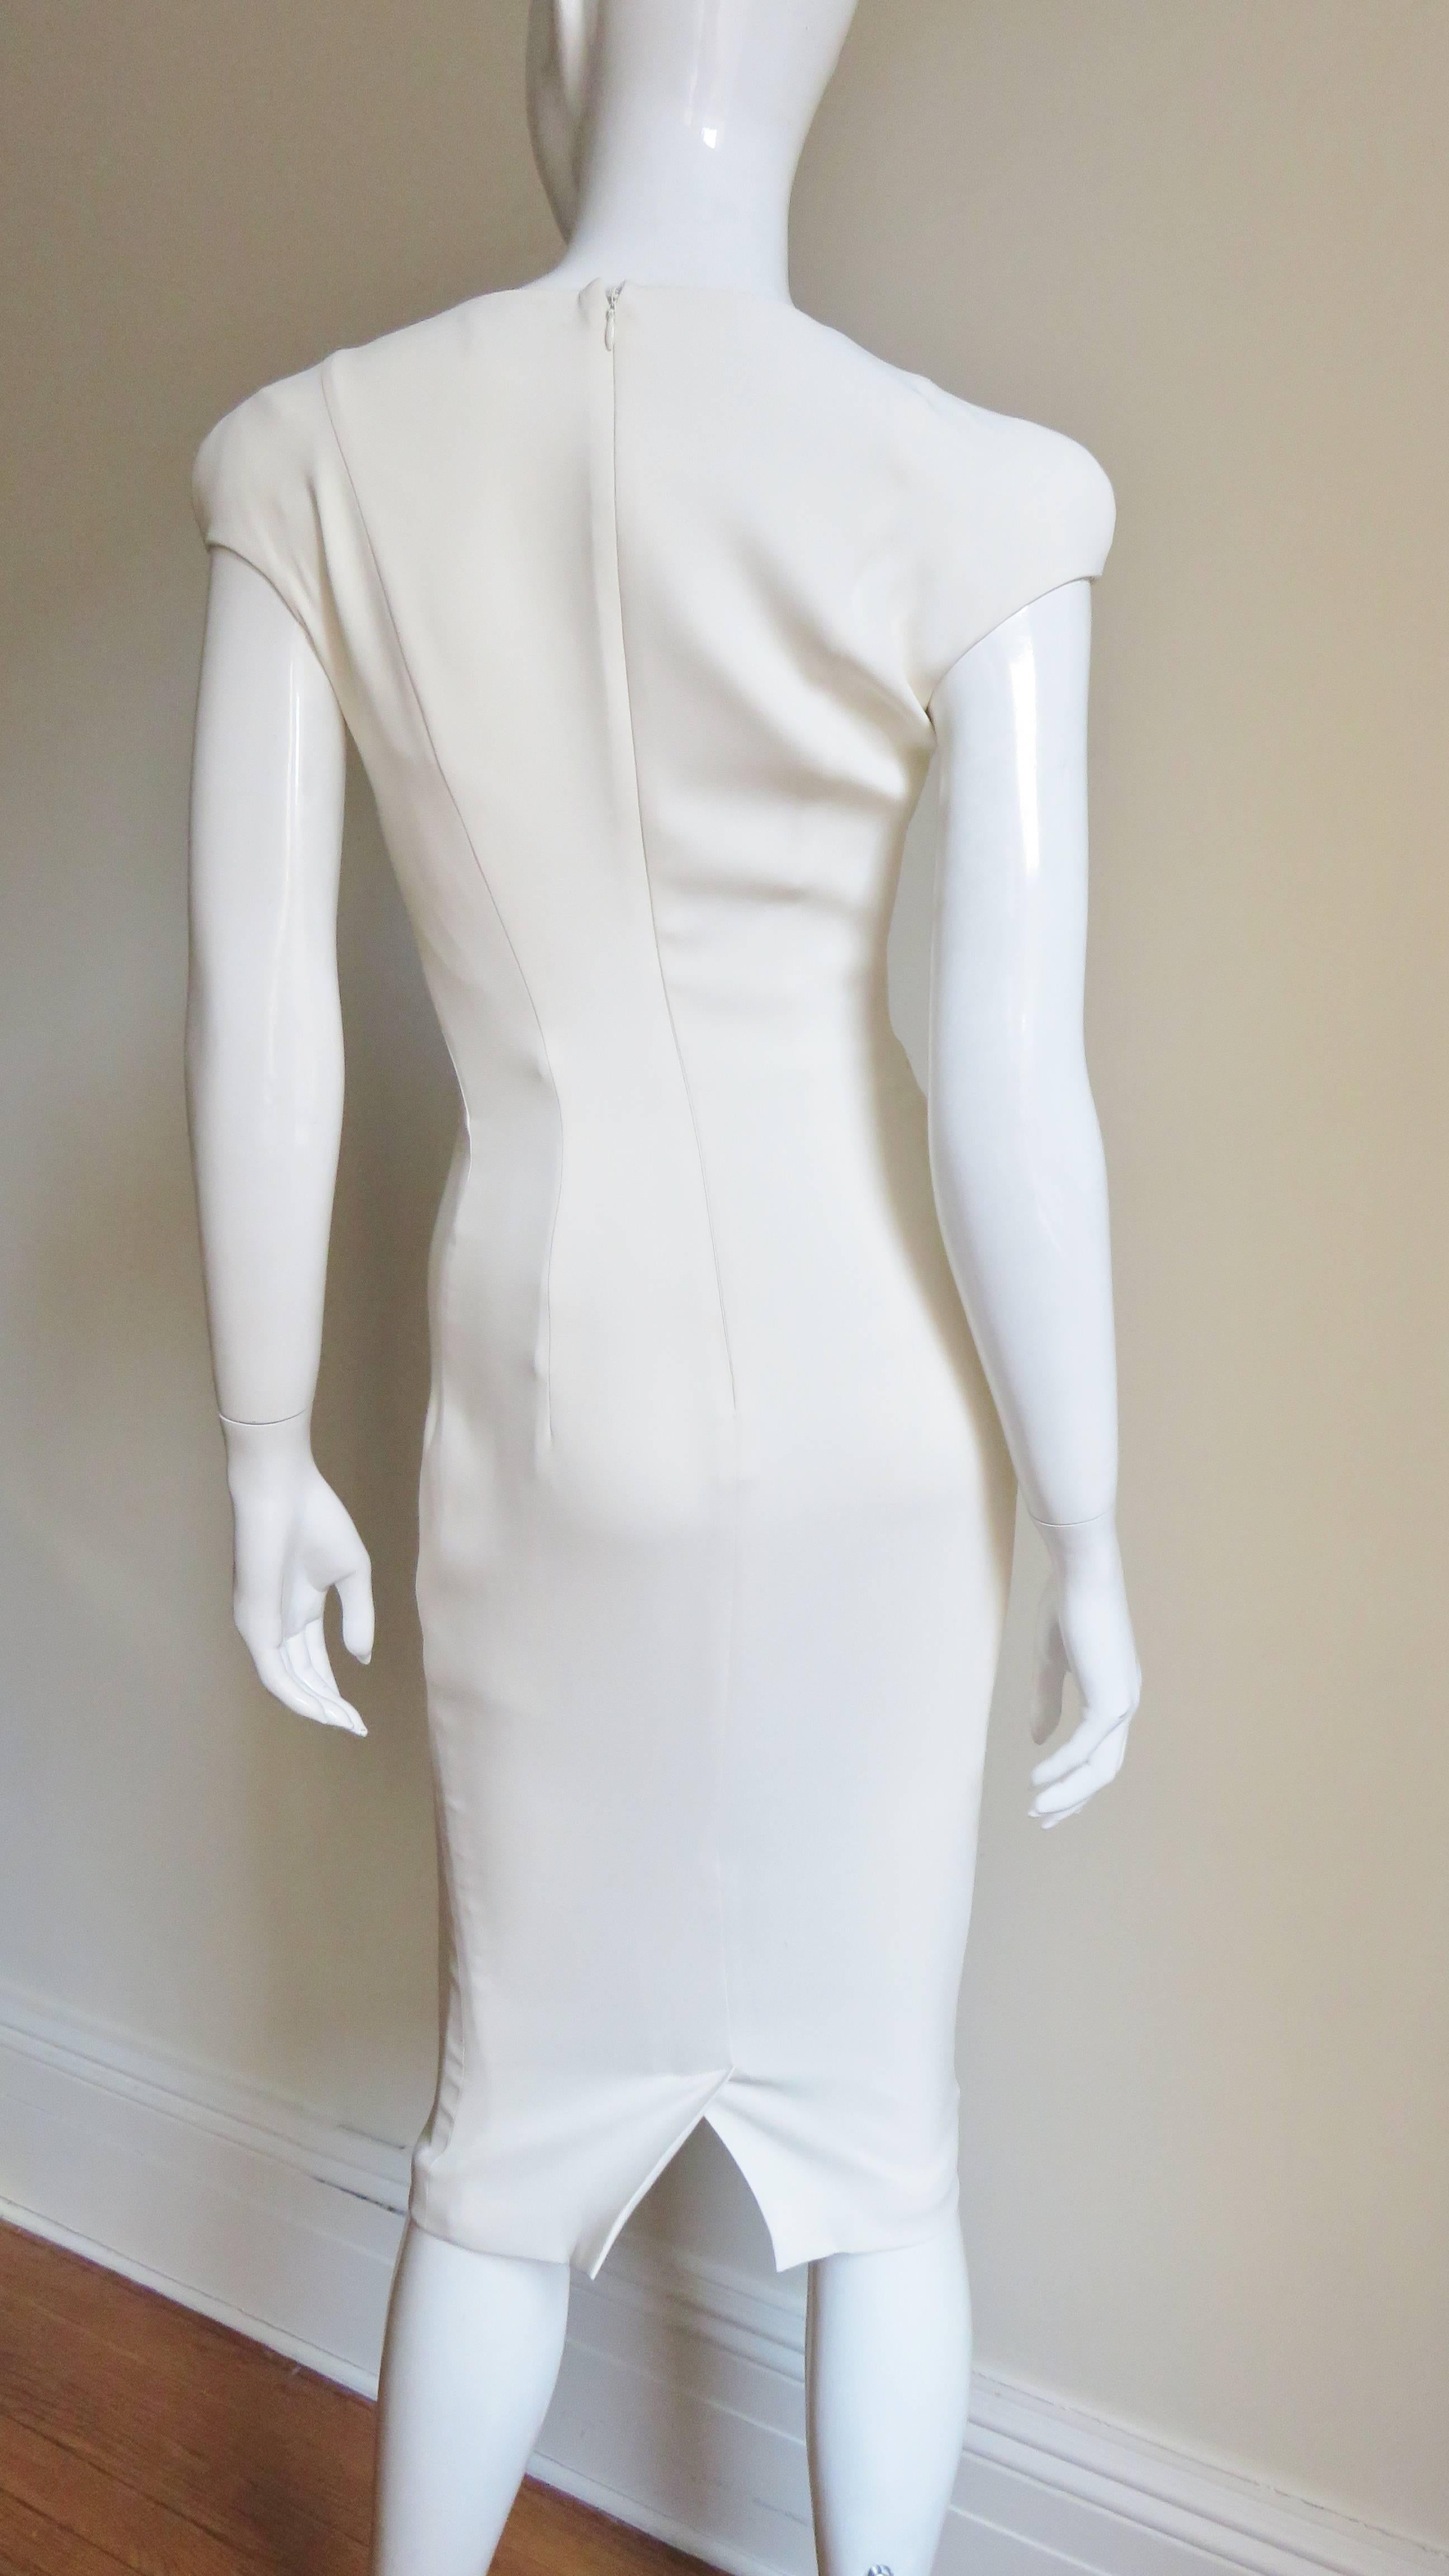 Iconic Tom Ford Academy Award Gwyneth Paltrow New Dress & Cape  1